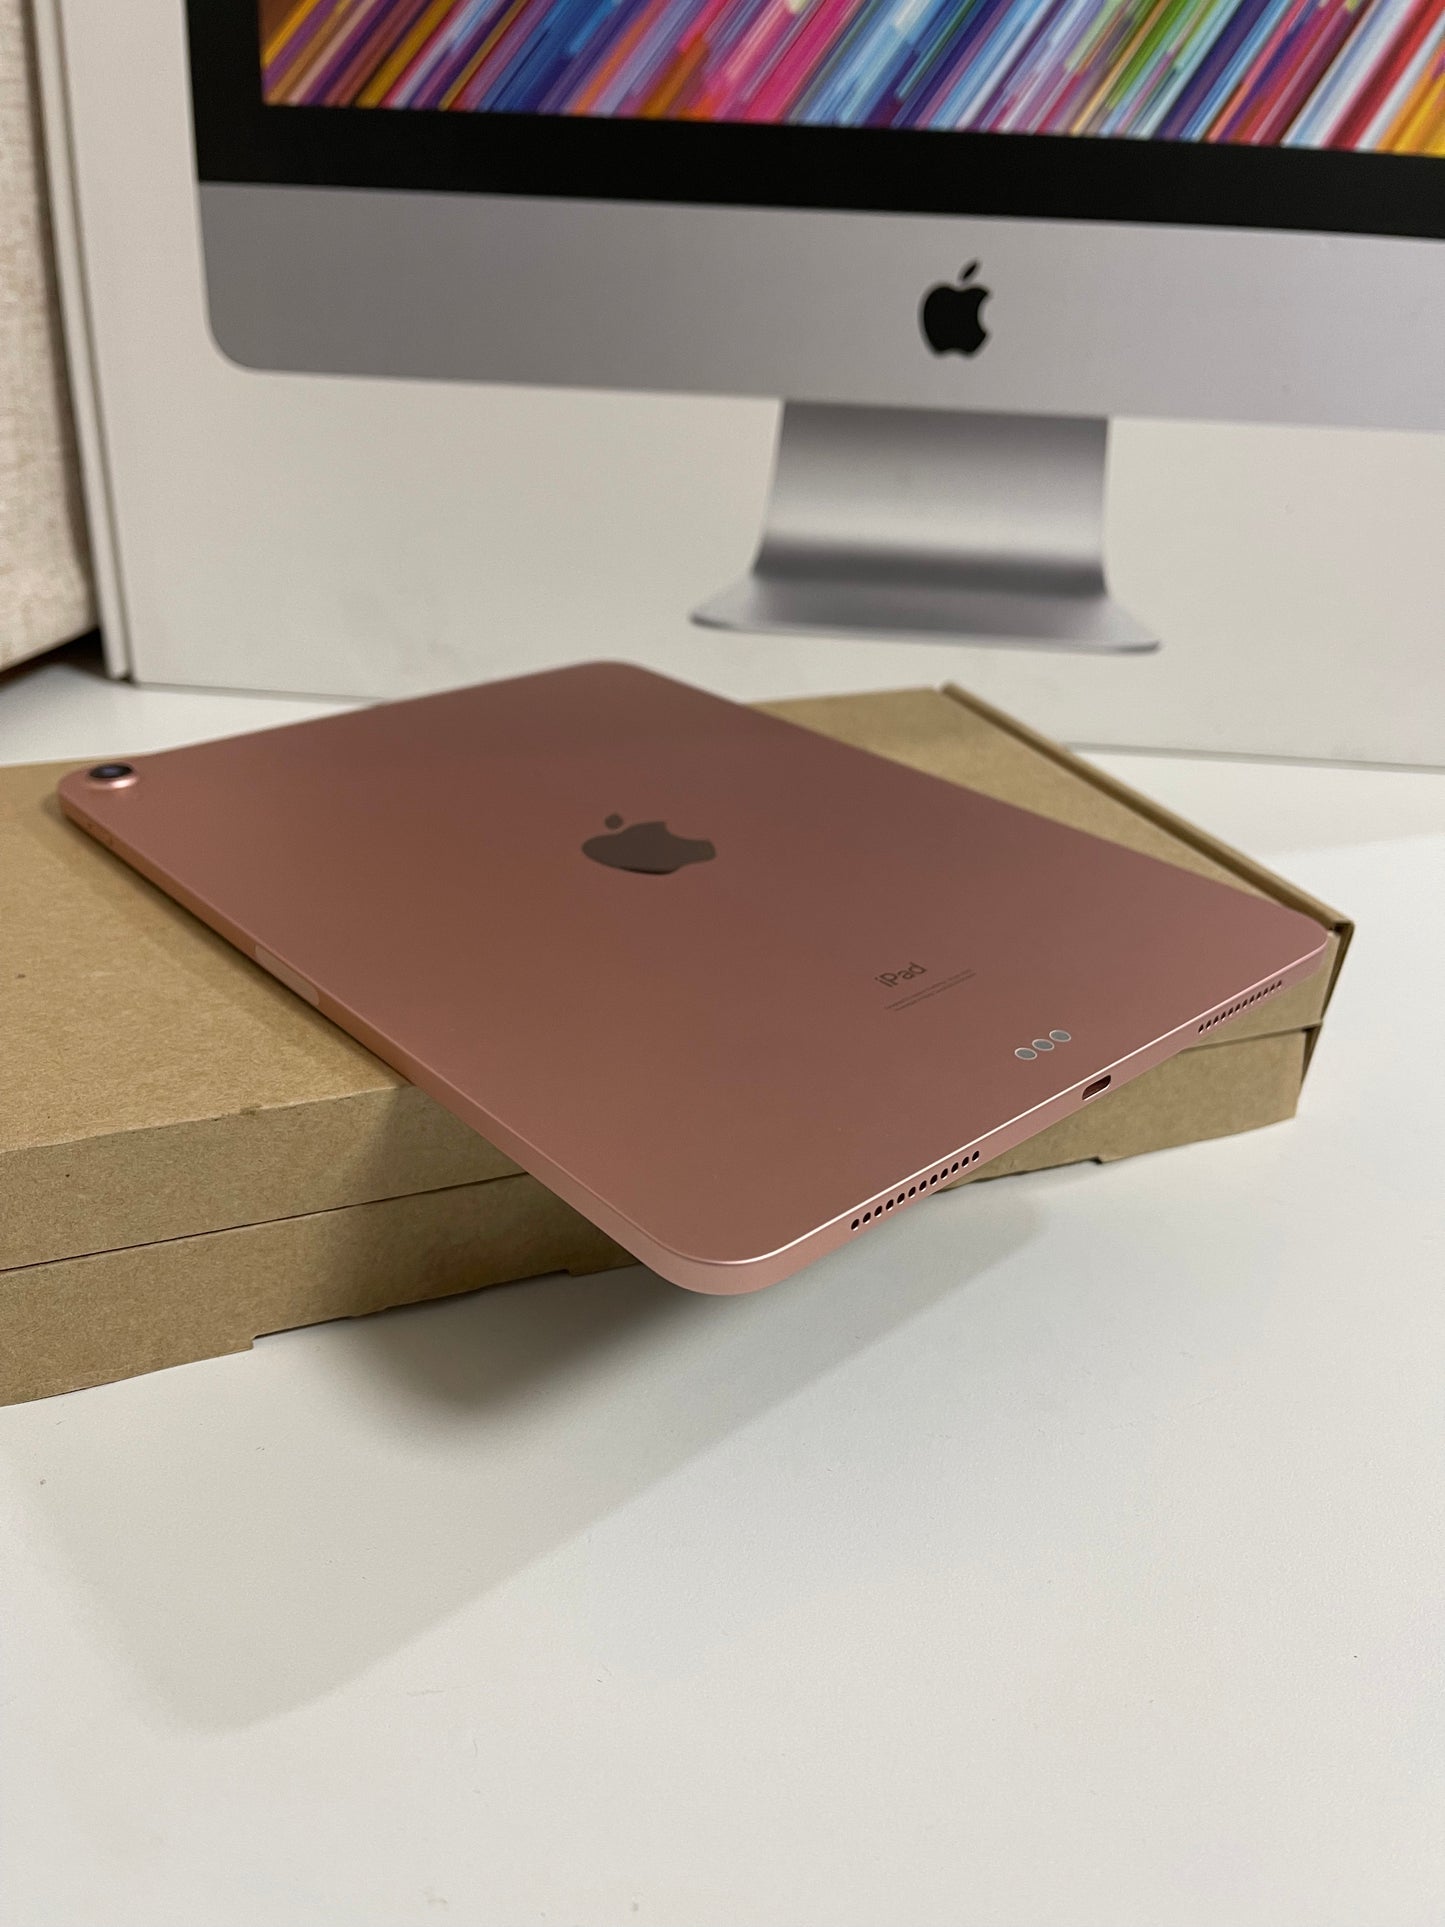 Apple iPad Air Wi-Fi 64GB - Rose Gold (4th Generation)